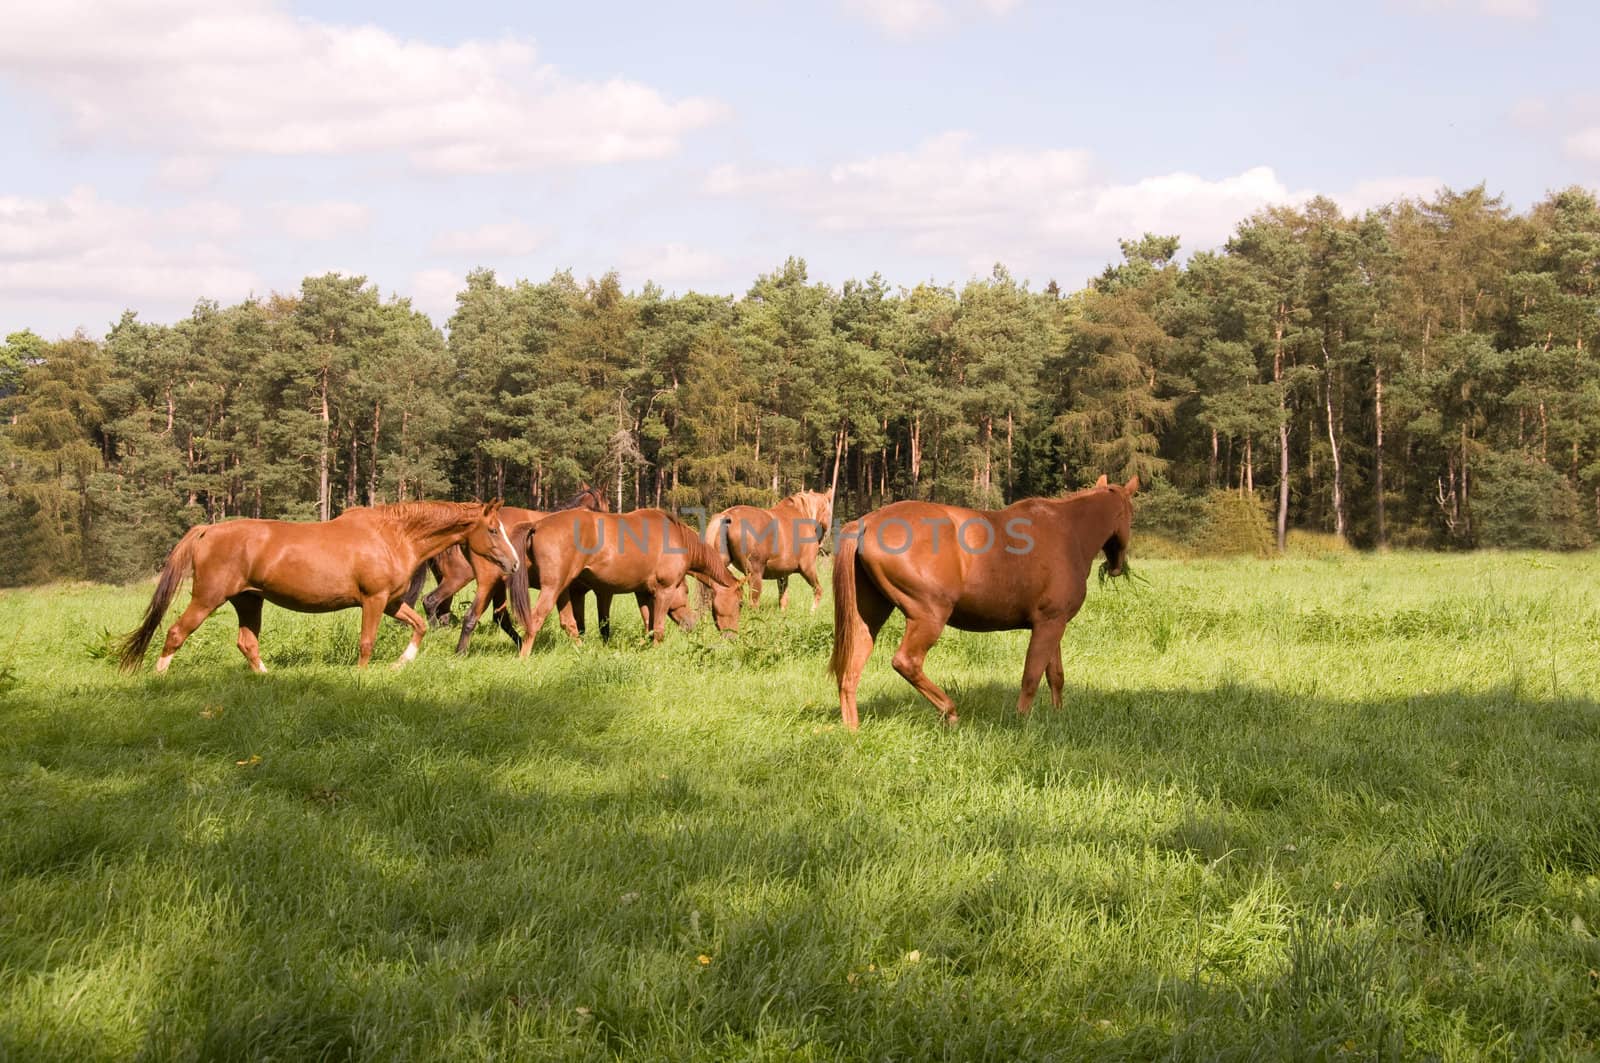 Horses graze in the pasture.